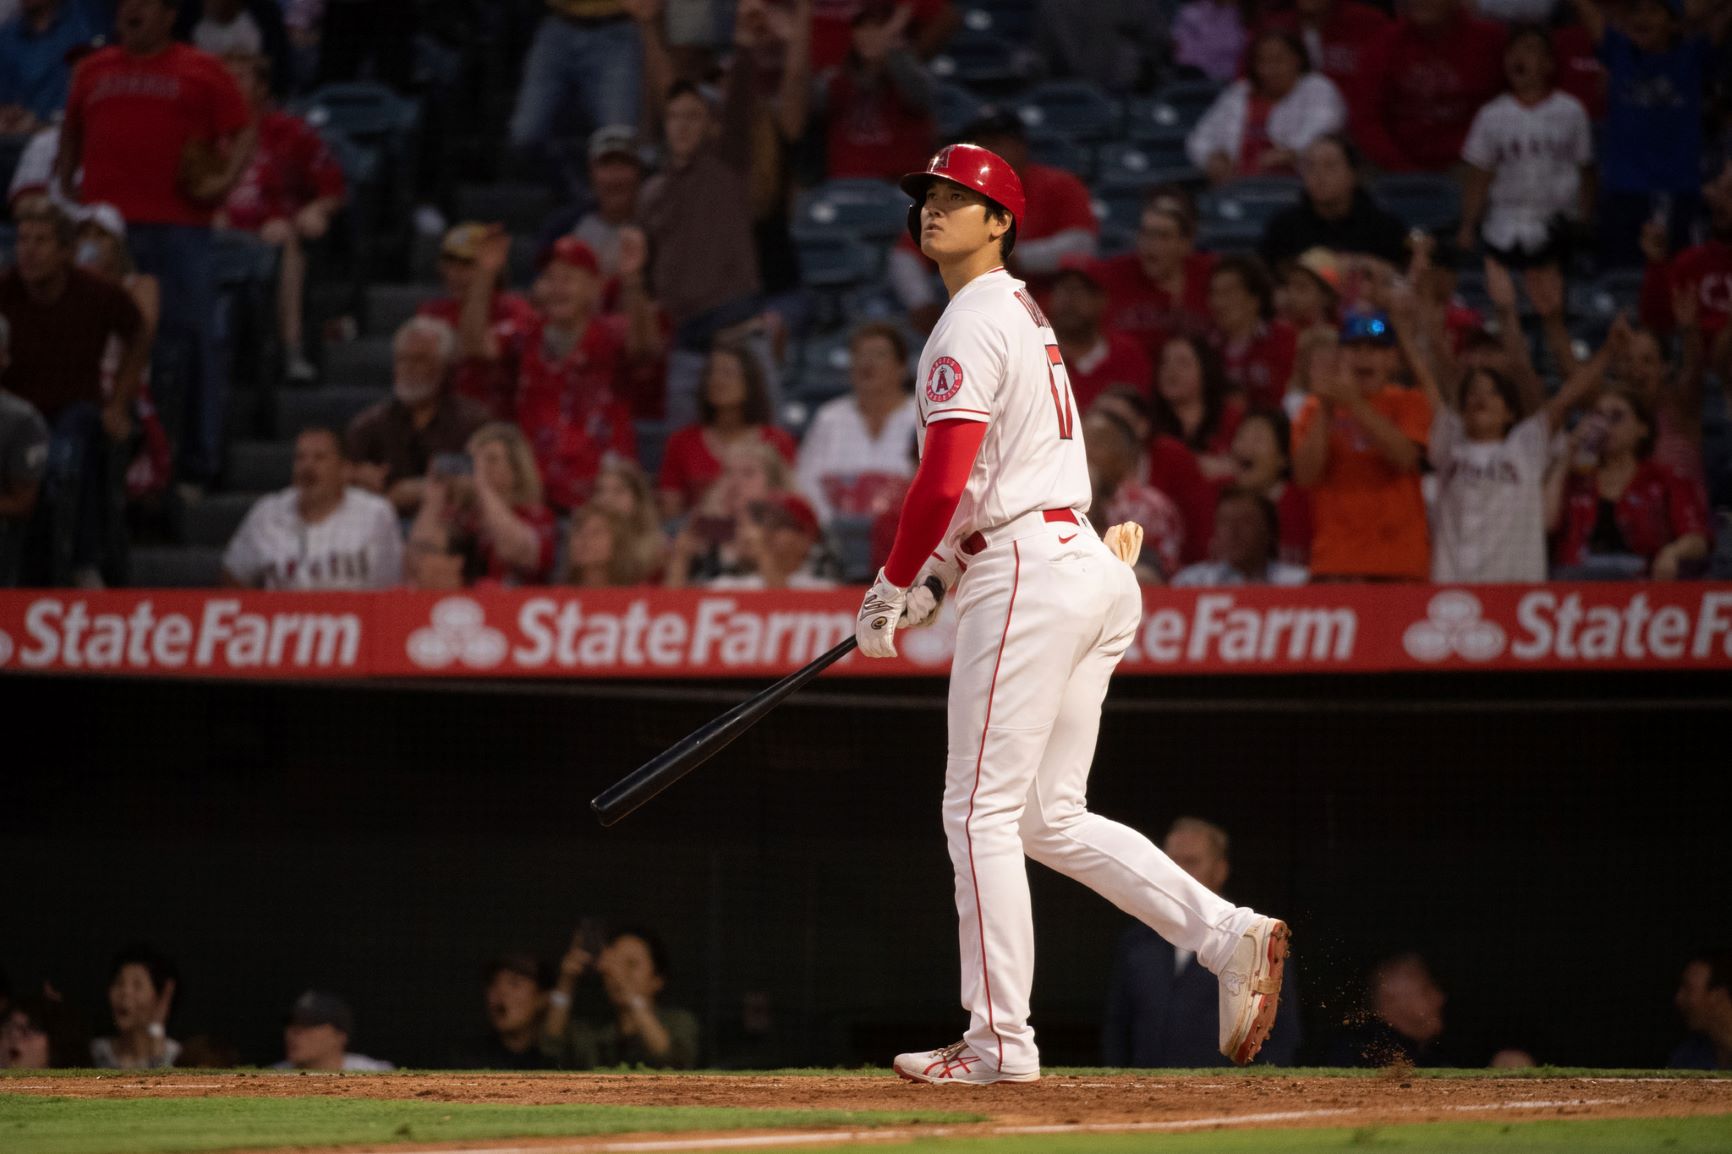 PHOTOS: Fans await Angel star Shohei Ohtani's MLB all-star start